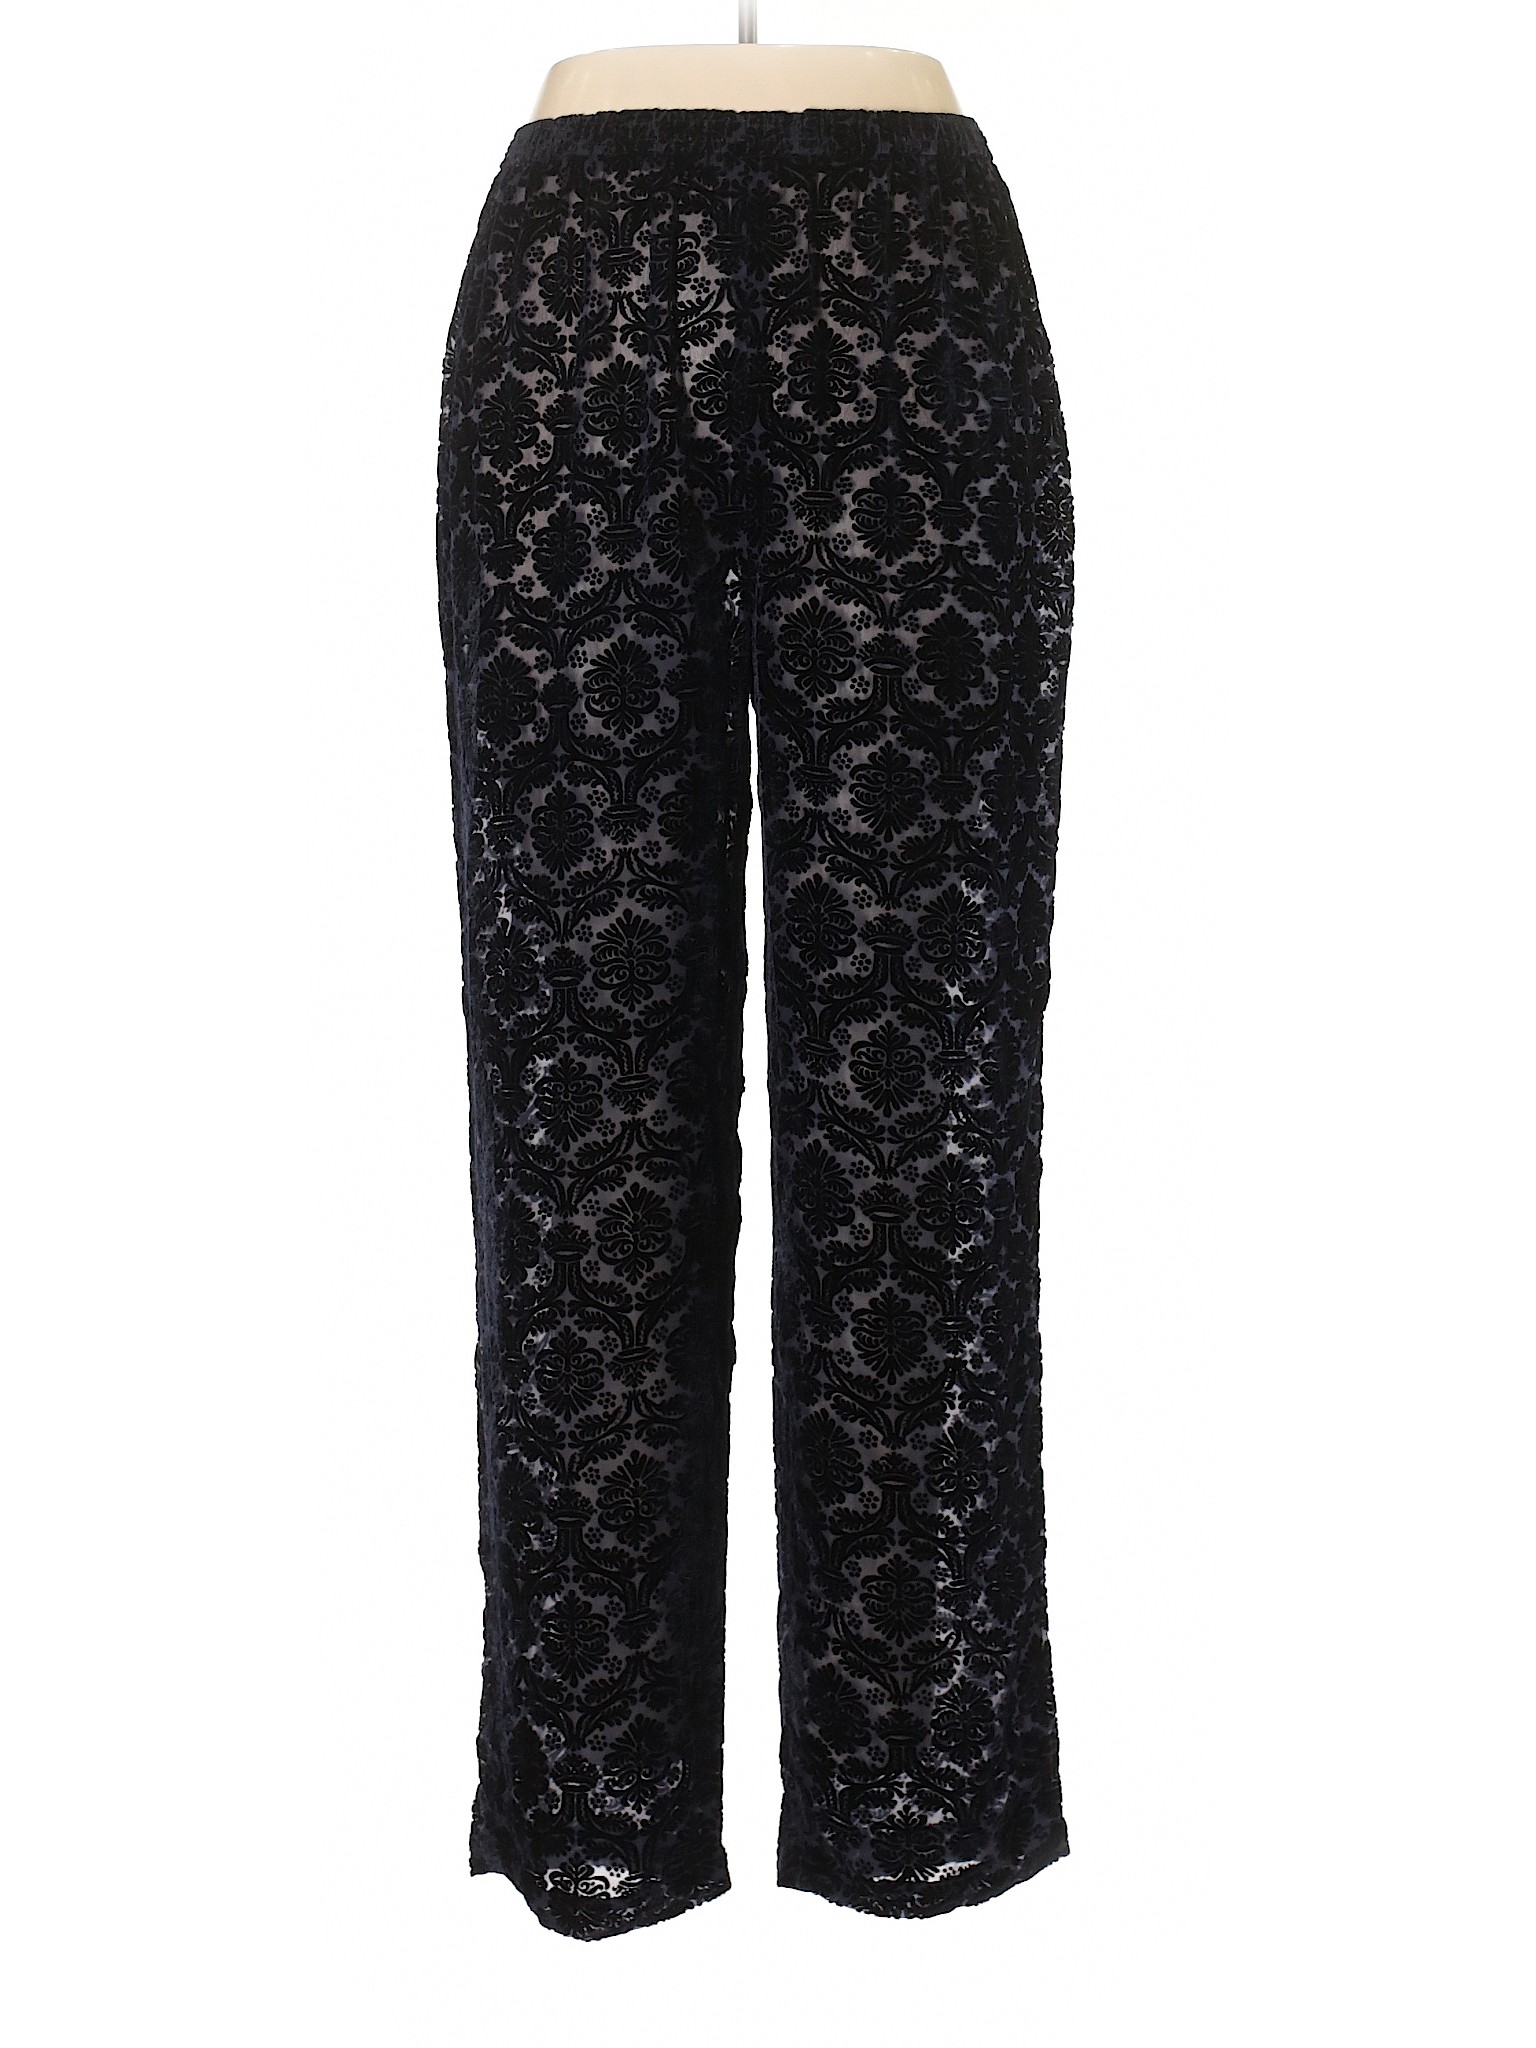 Folio Saks Fifth Avenue Women Black Casual Pants XL | eBay